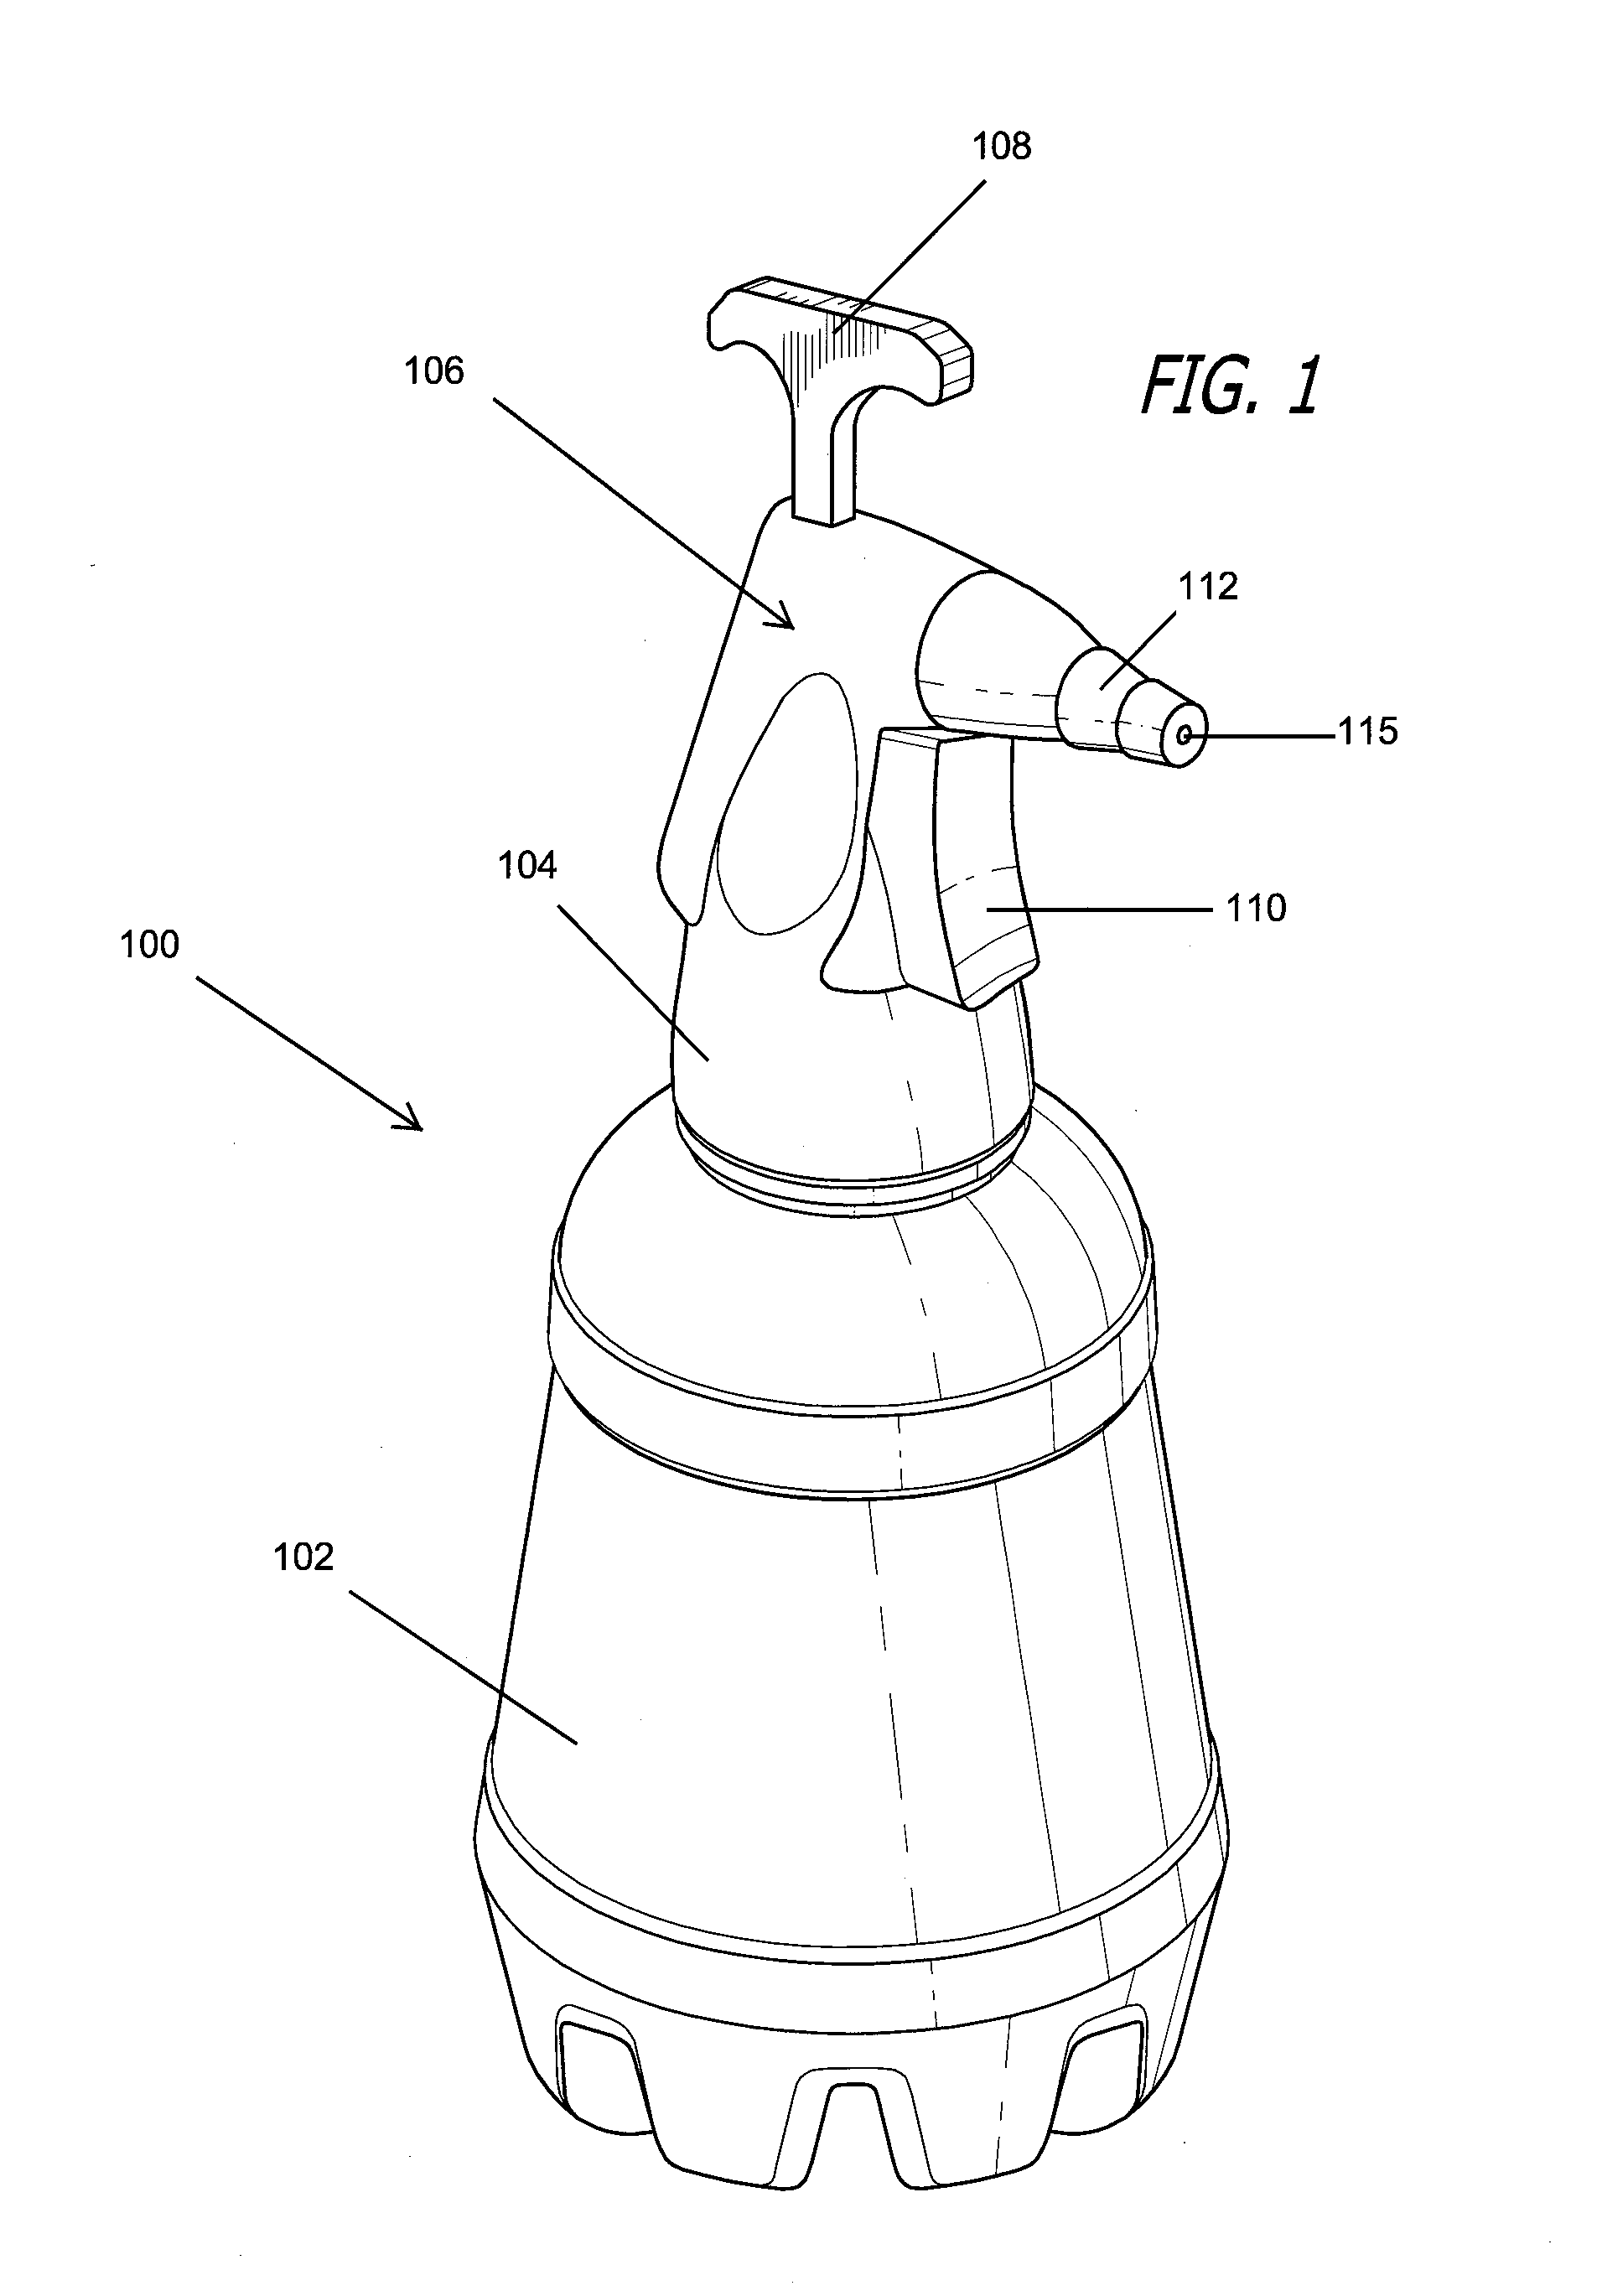 Balloon pumper having relief valve